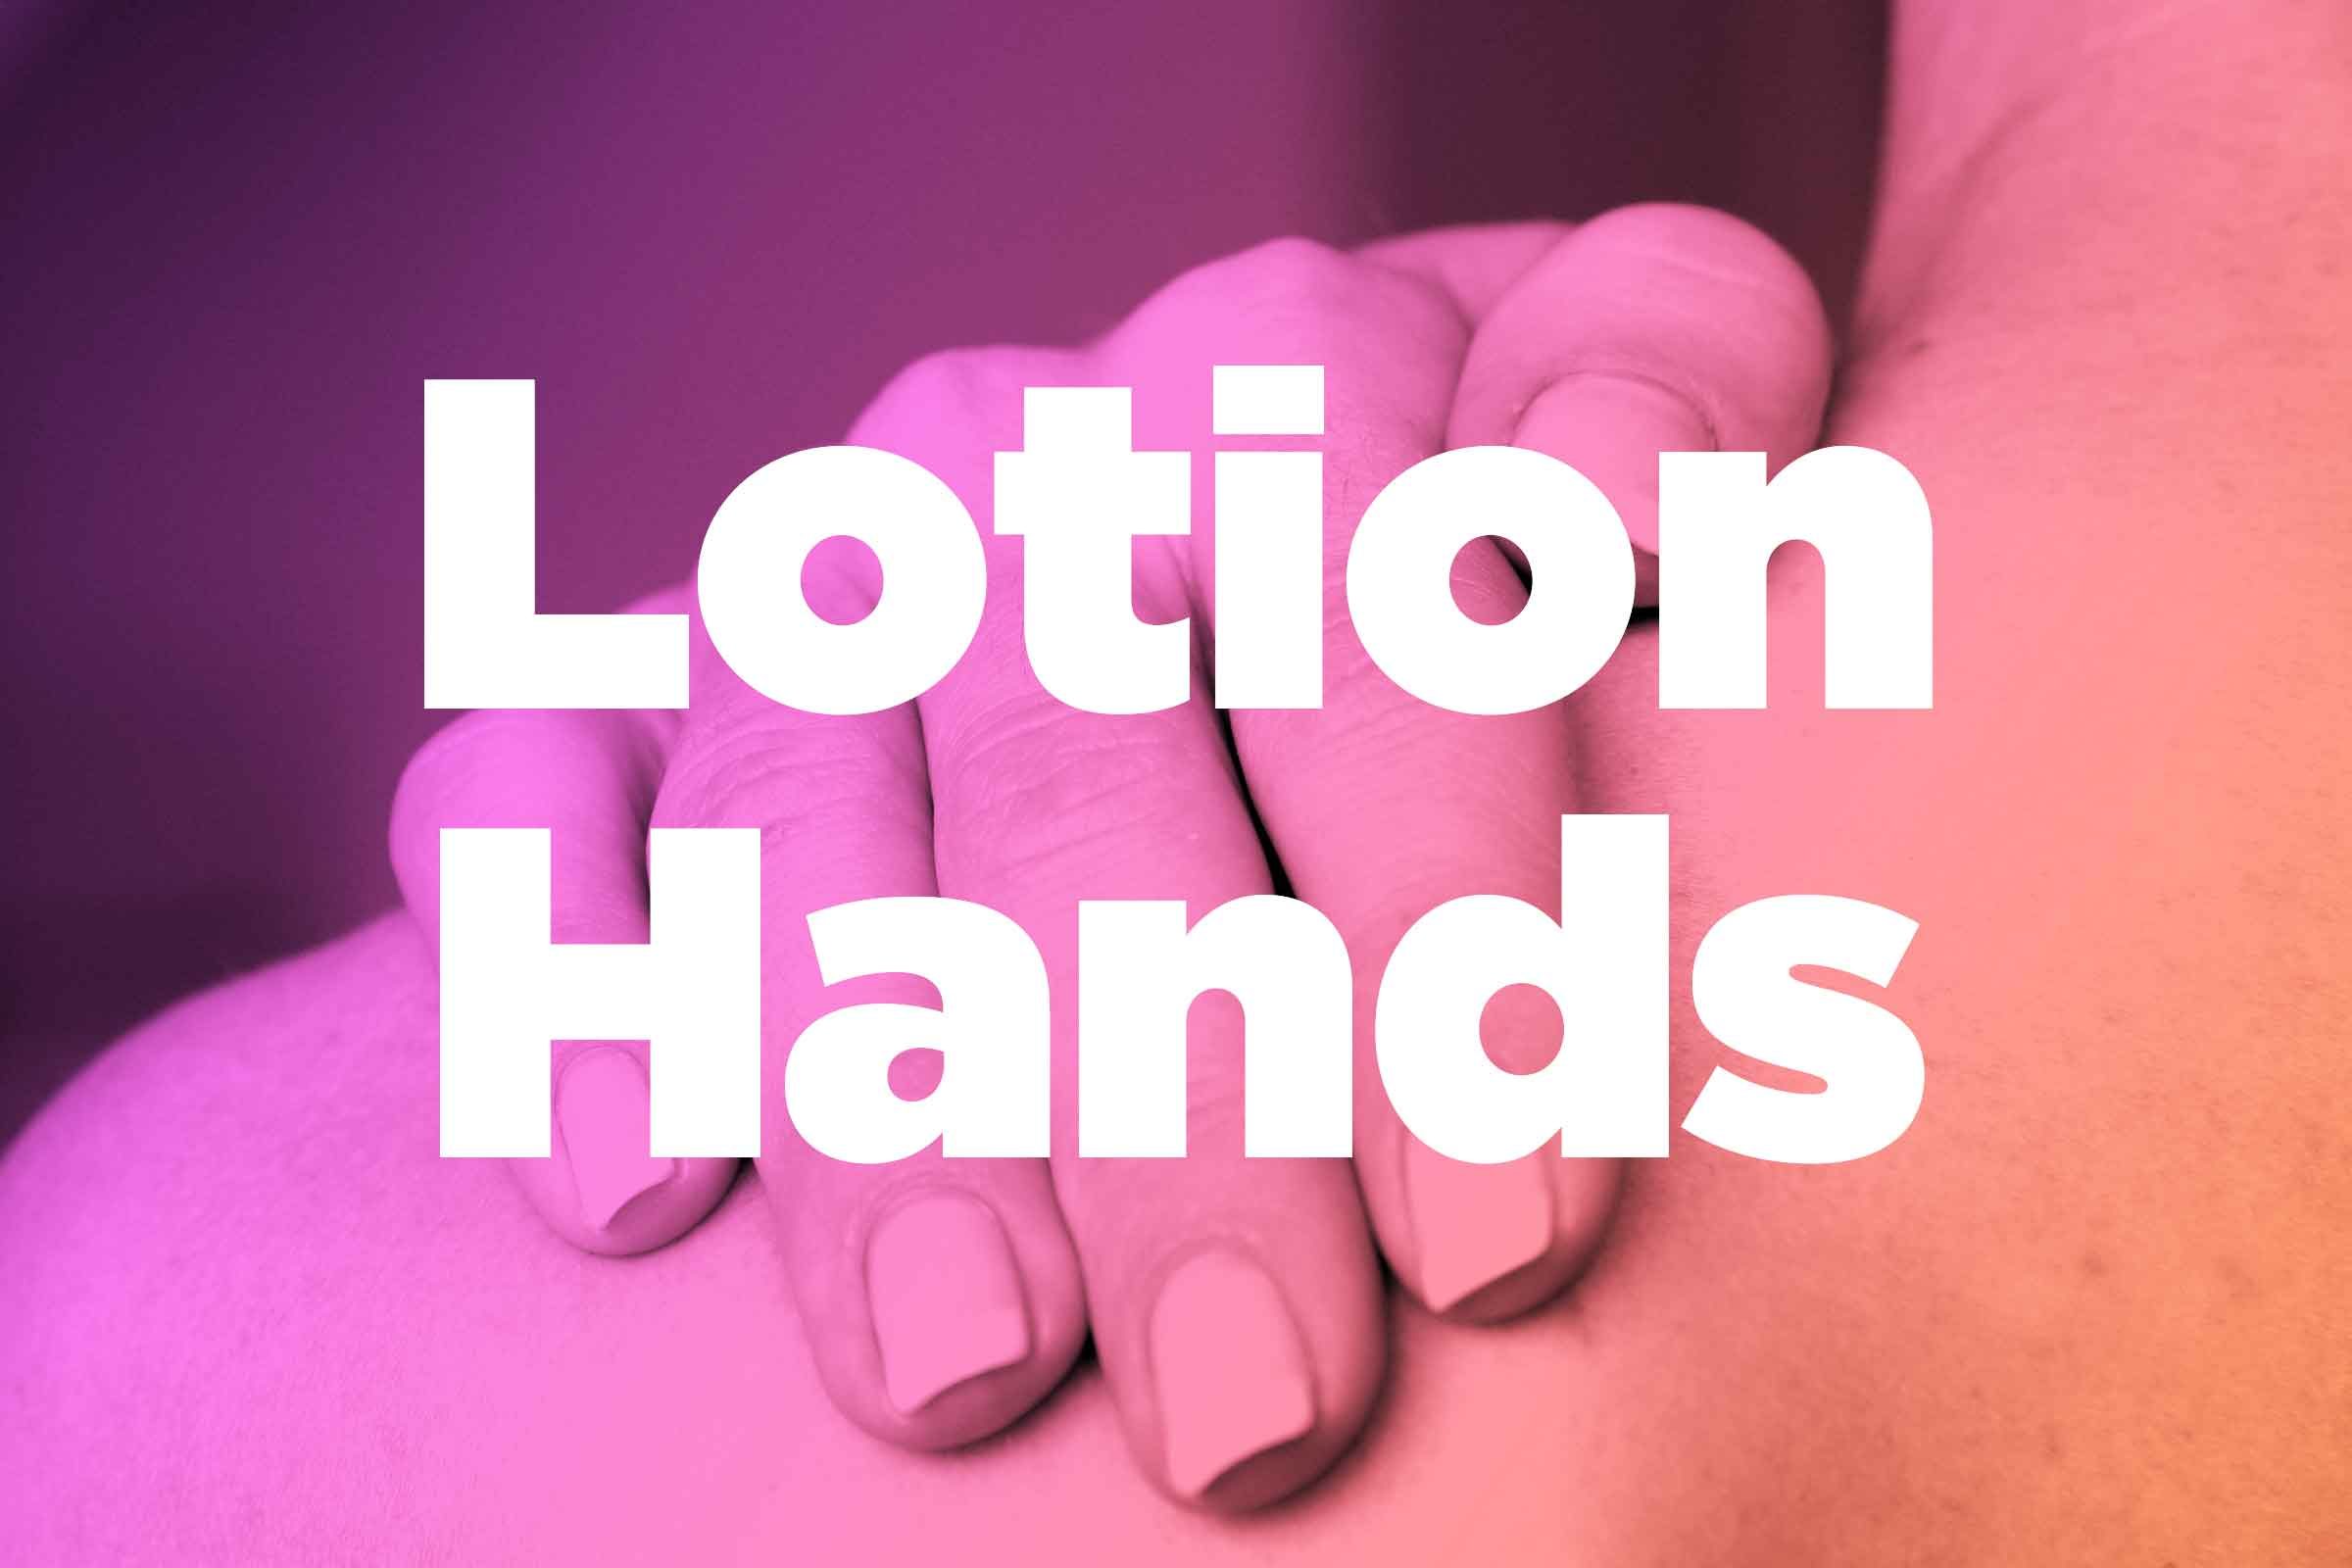 Words "lotion hands" over image of hands rubbing shoulder